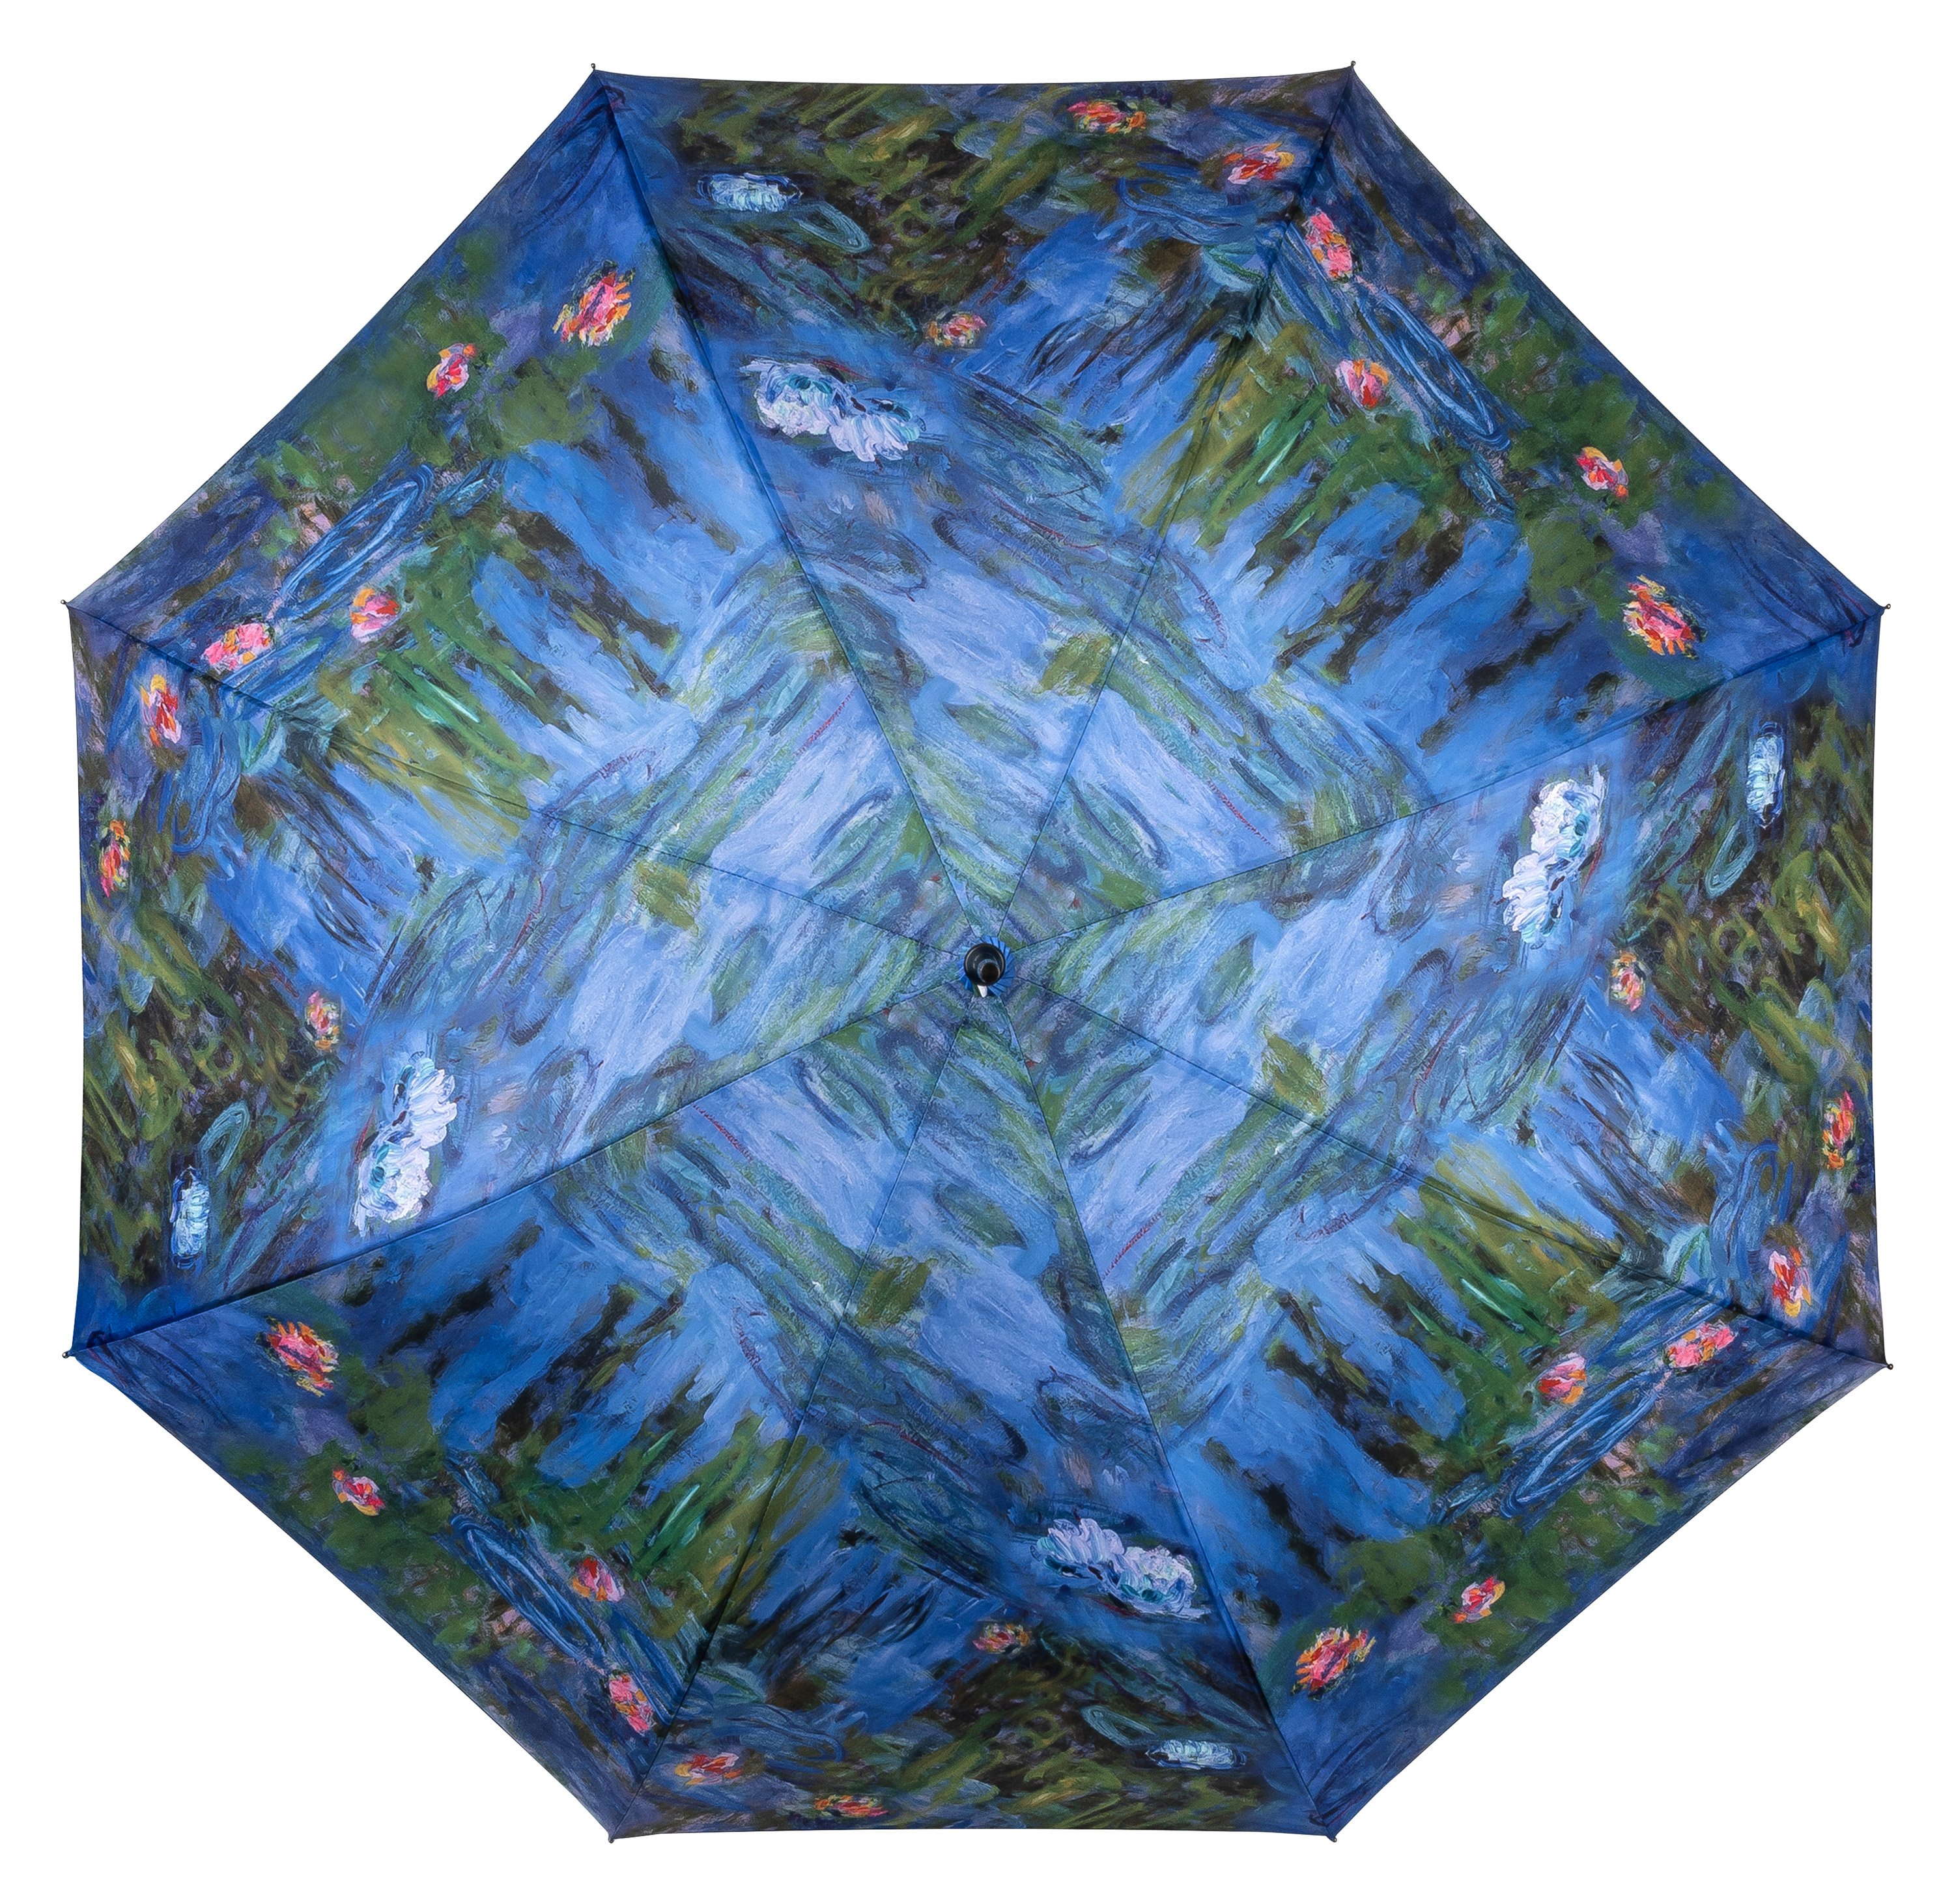 | REGENSCHIRME Claude lieben Kunst Automatik Schirme | LILIENFELD Motiv Regenschirm VON Monet: Seerosen | - Regenschirme mit Wir blau